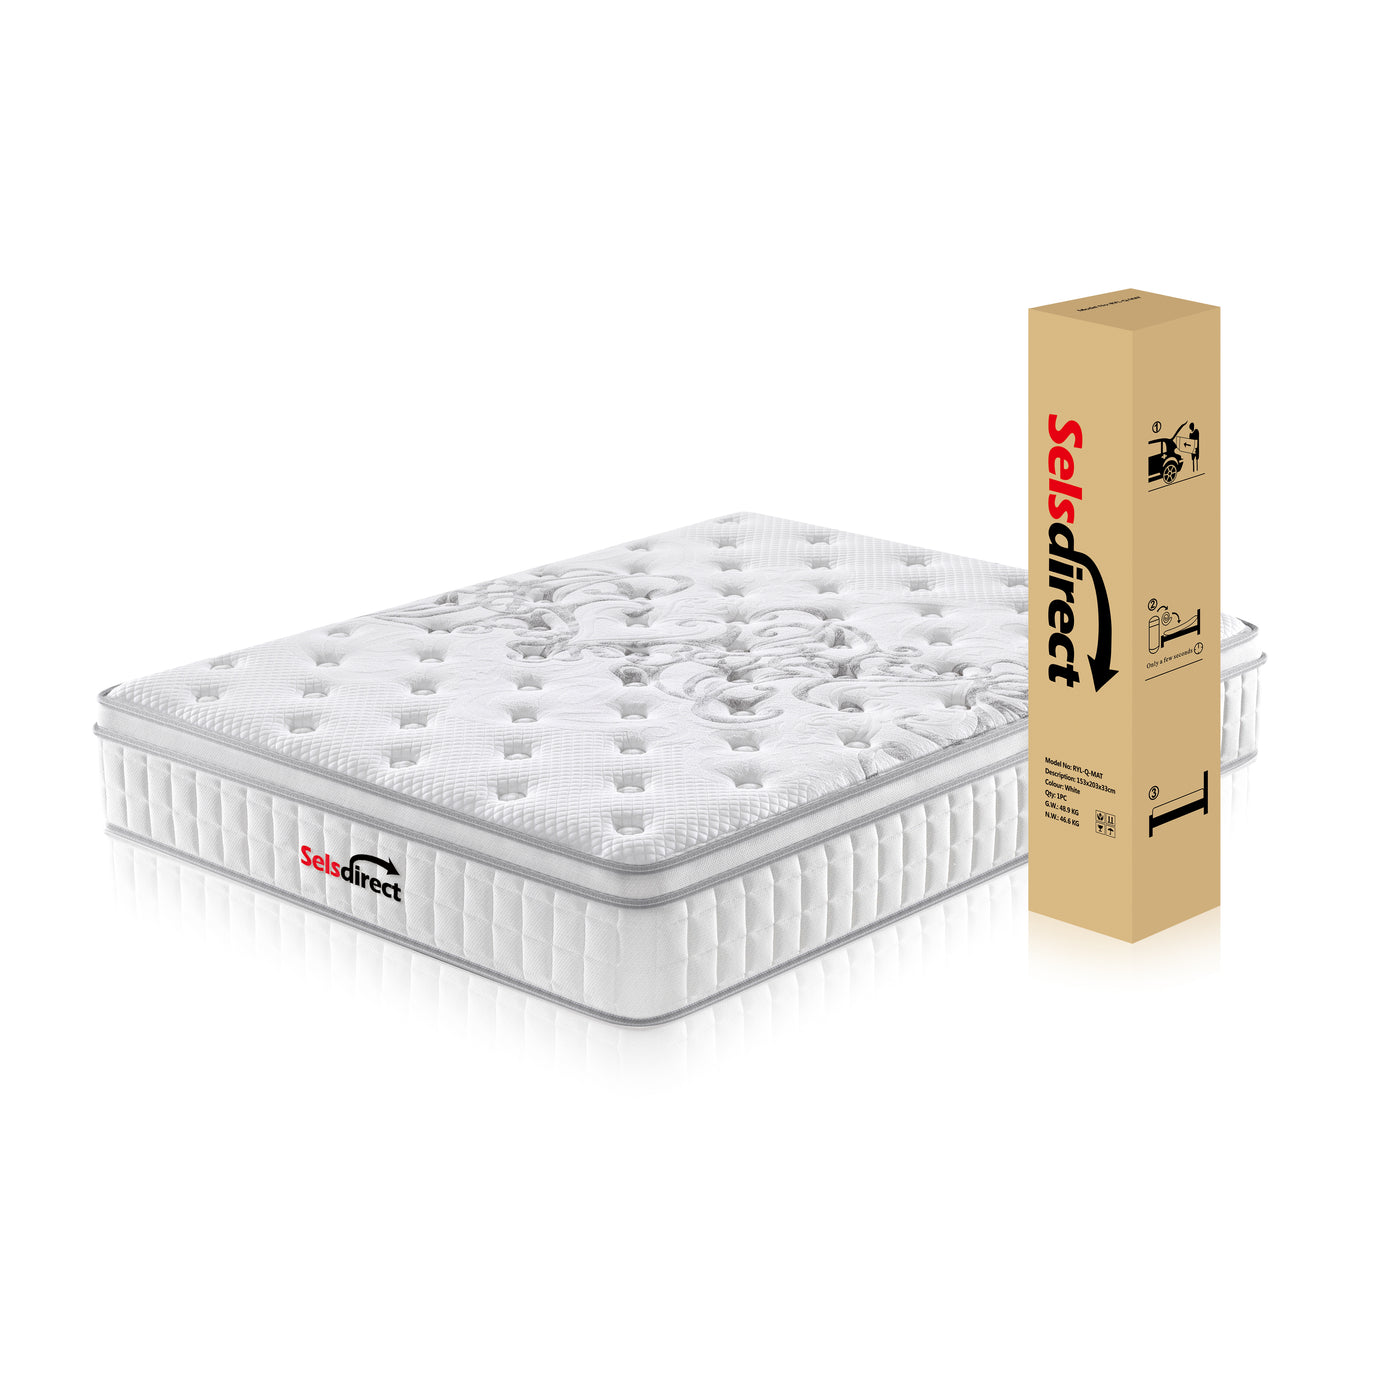 Madrid Gas Lift Storage Bed Frame (Charcoal Linen Fabric) and Royal Memory Foam Plush Mattress (7758248968446)